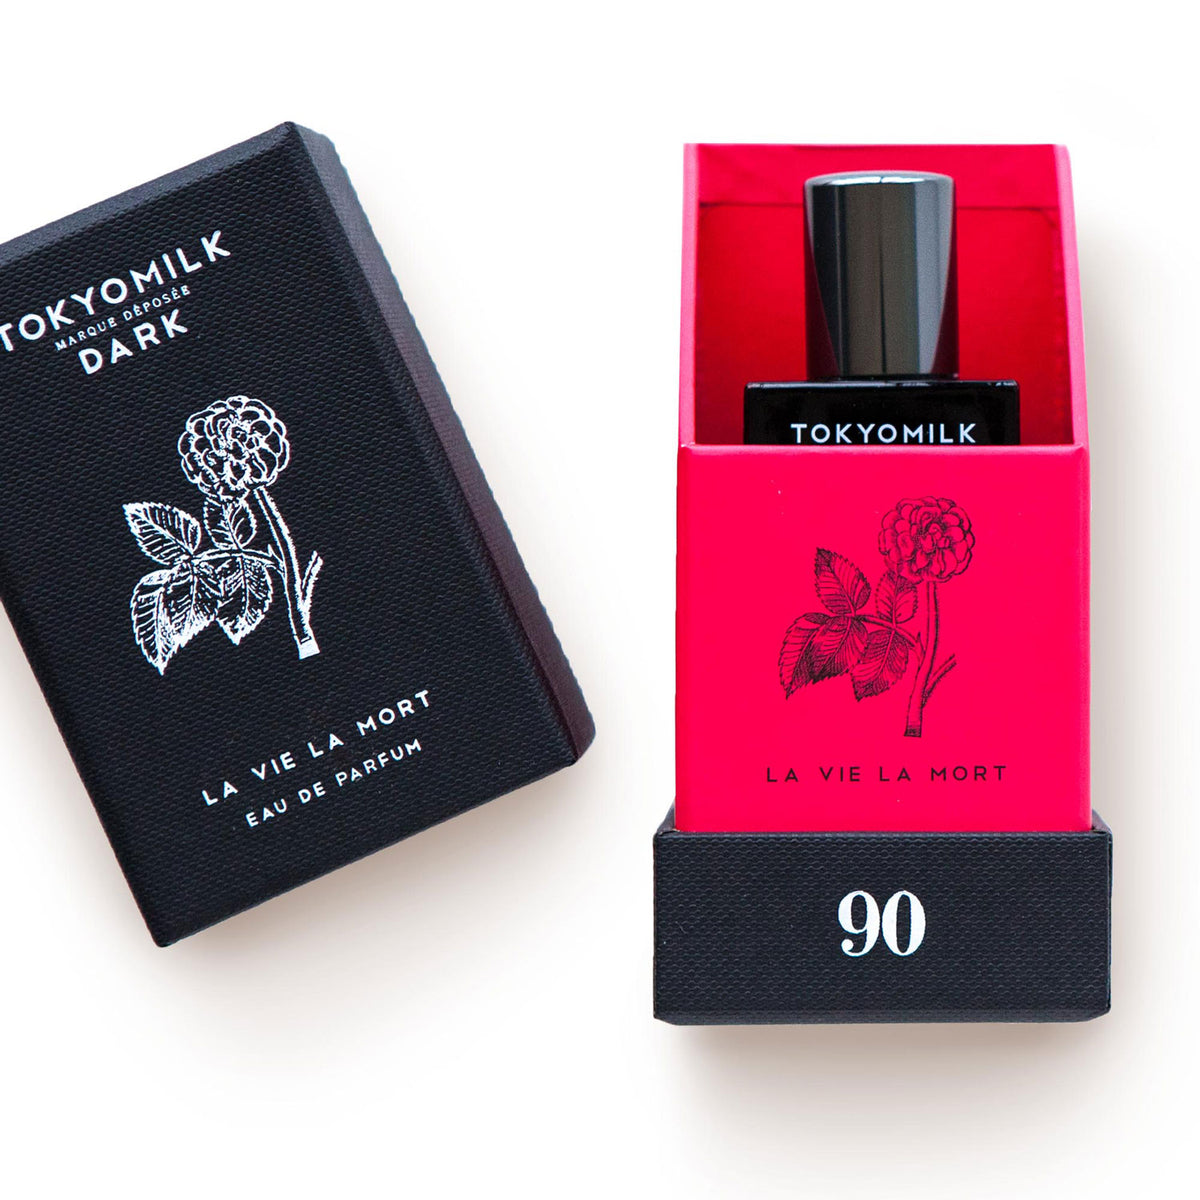 Margot Elena's TokyoMilk Dark La Vie La Mort No. 90 Eau de Parfum perfume with a black box featuring a white jasmine and tuberose floral design on the left, and a bright red perfume bottle labeled “la vie la mort” on the right